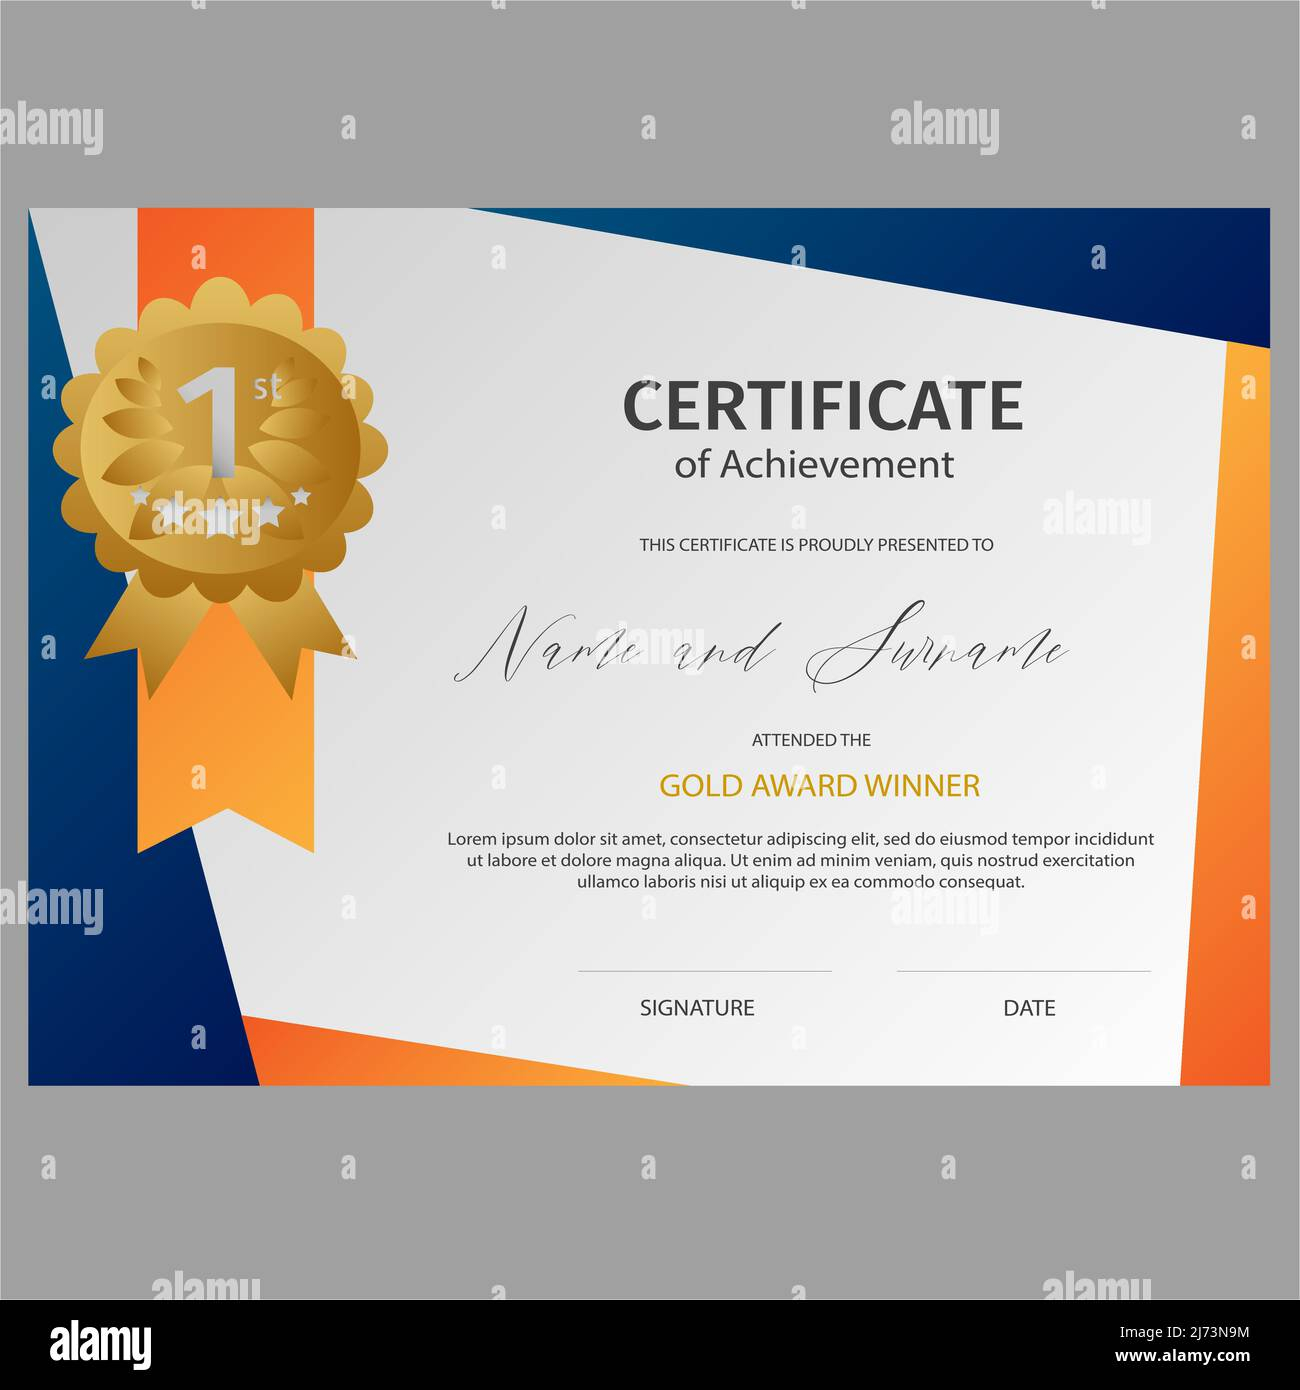 Certificate of Achievement 10st winner award template vector  With Regard To First Place Award Certificate Template